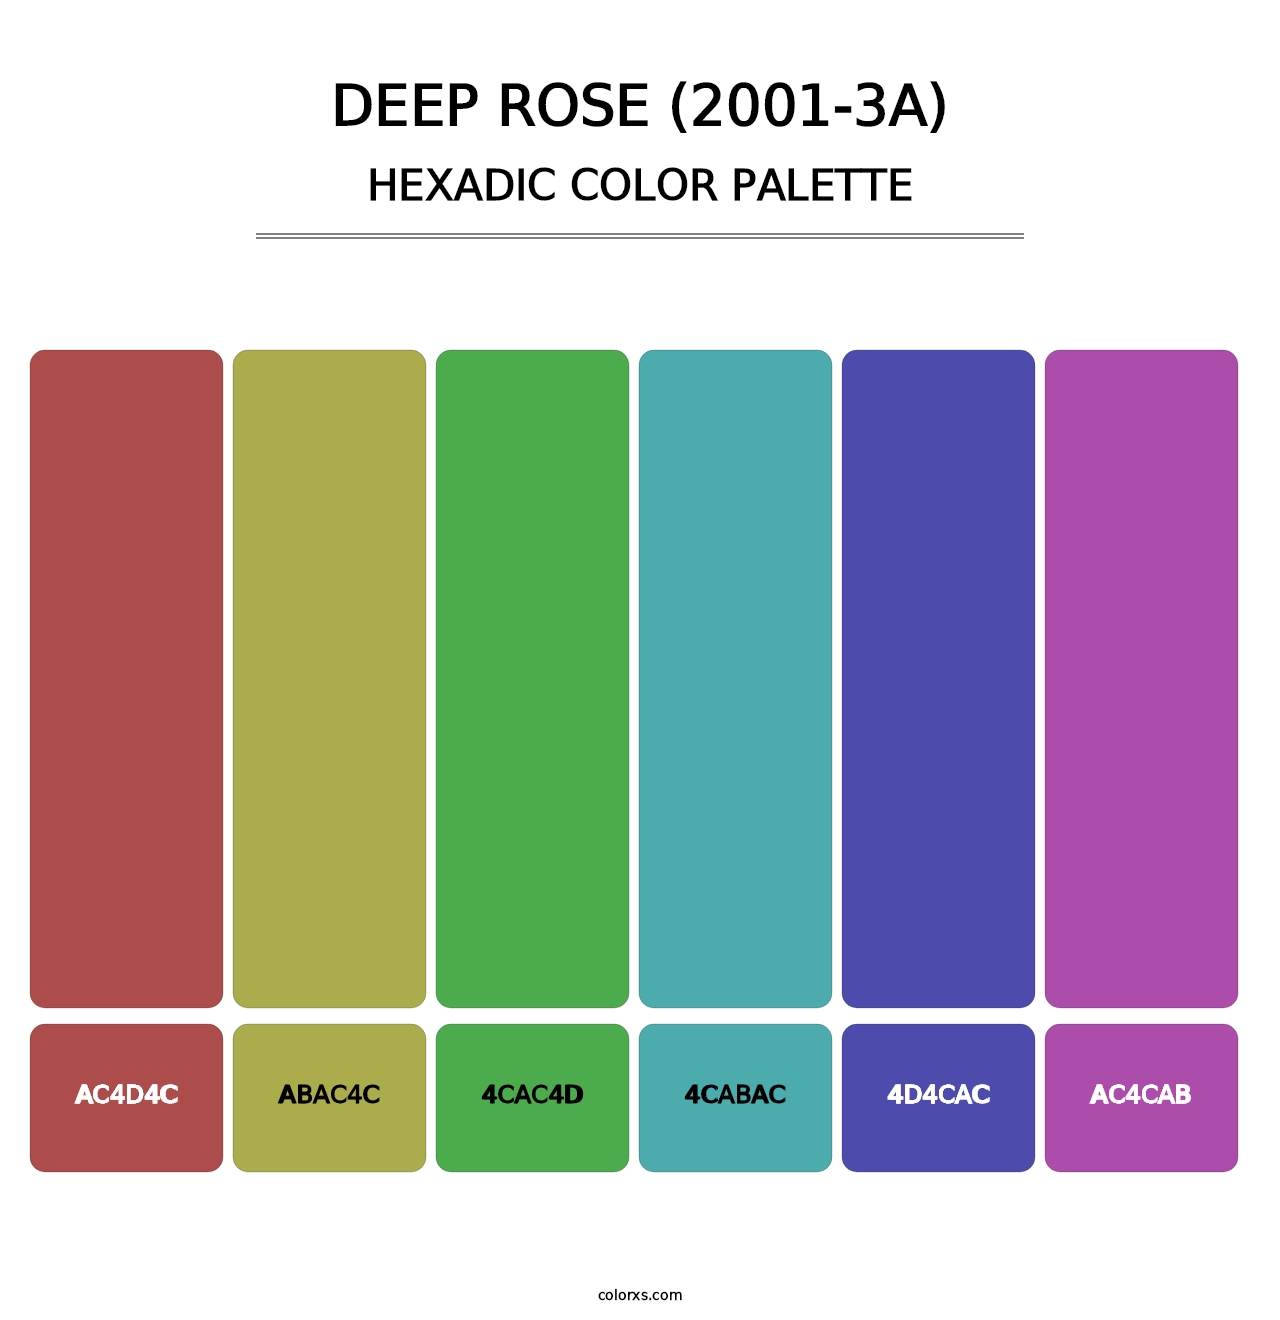 Deep Rose (2001-3A) - Hexadic Color Palette